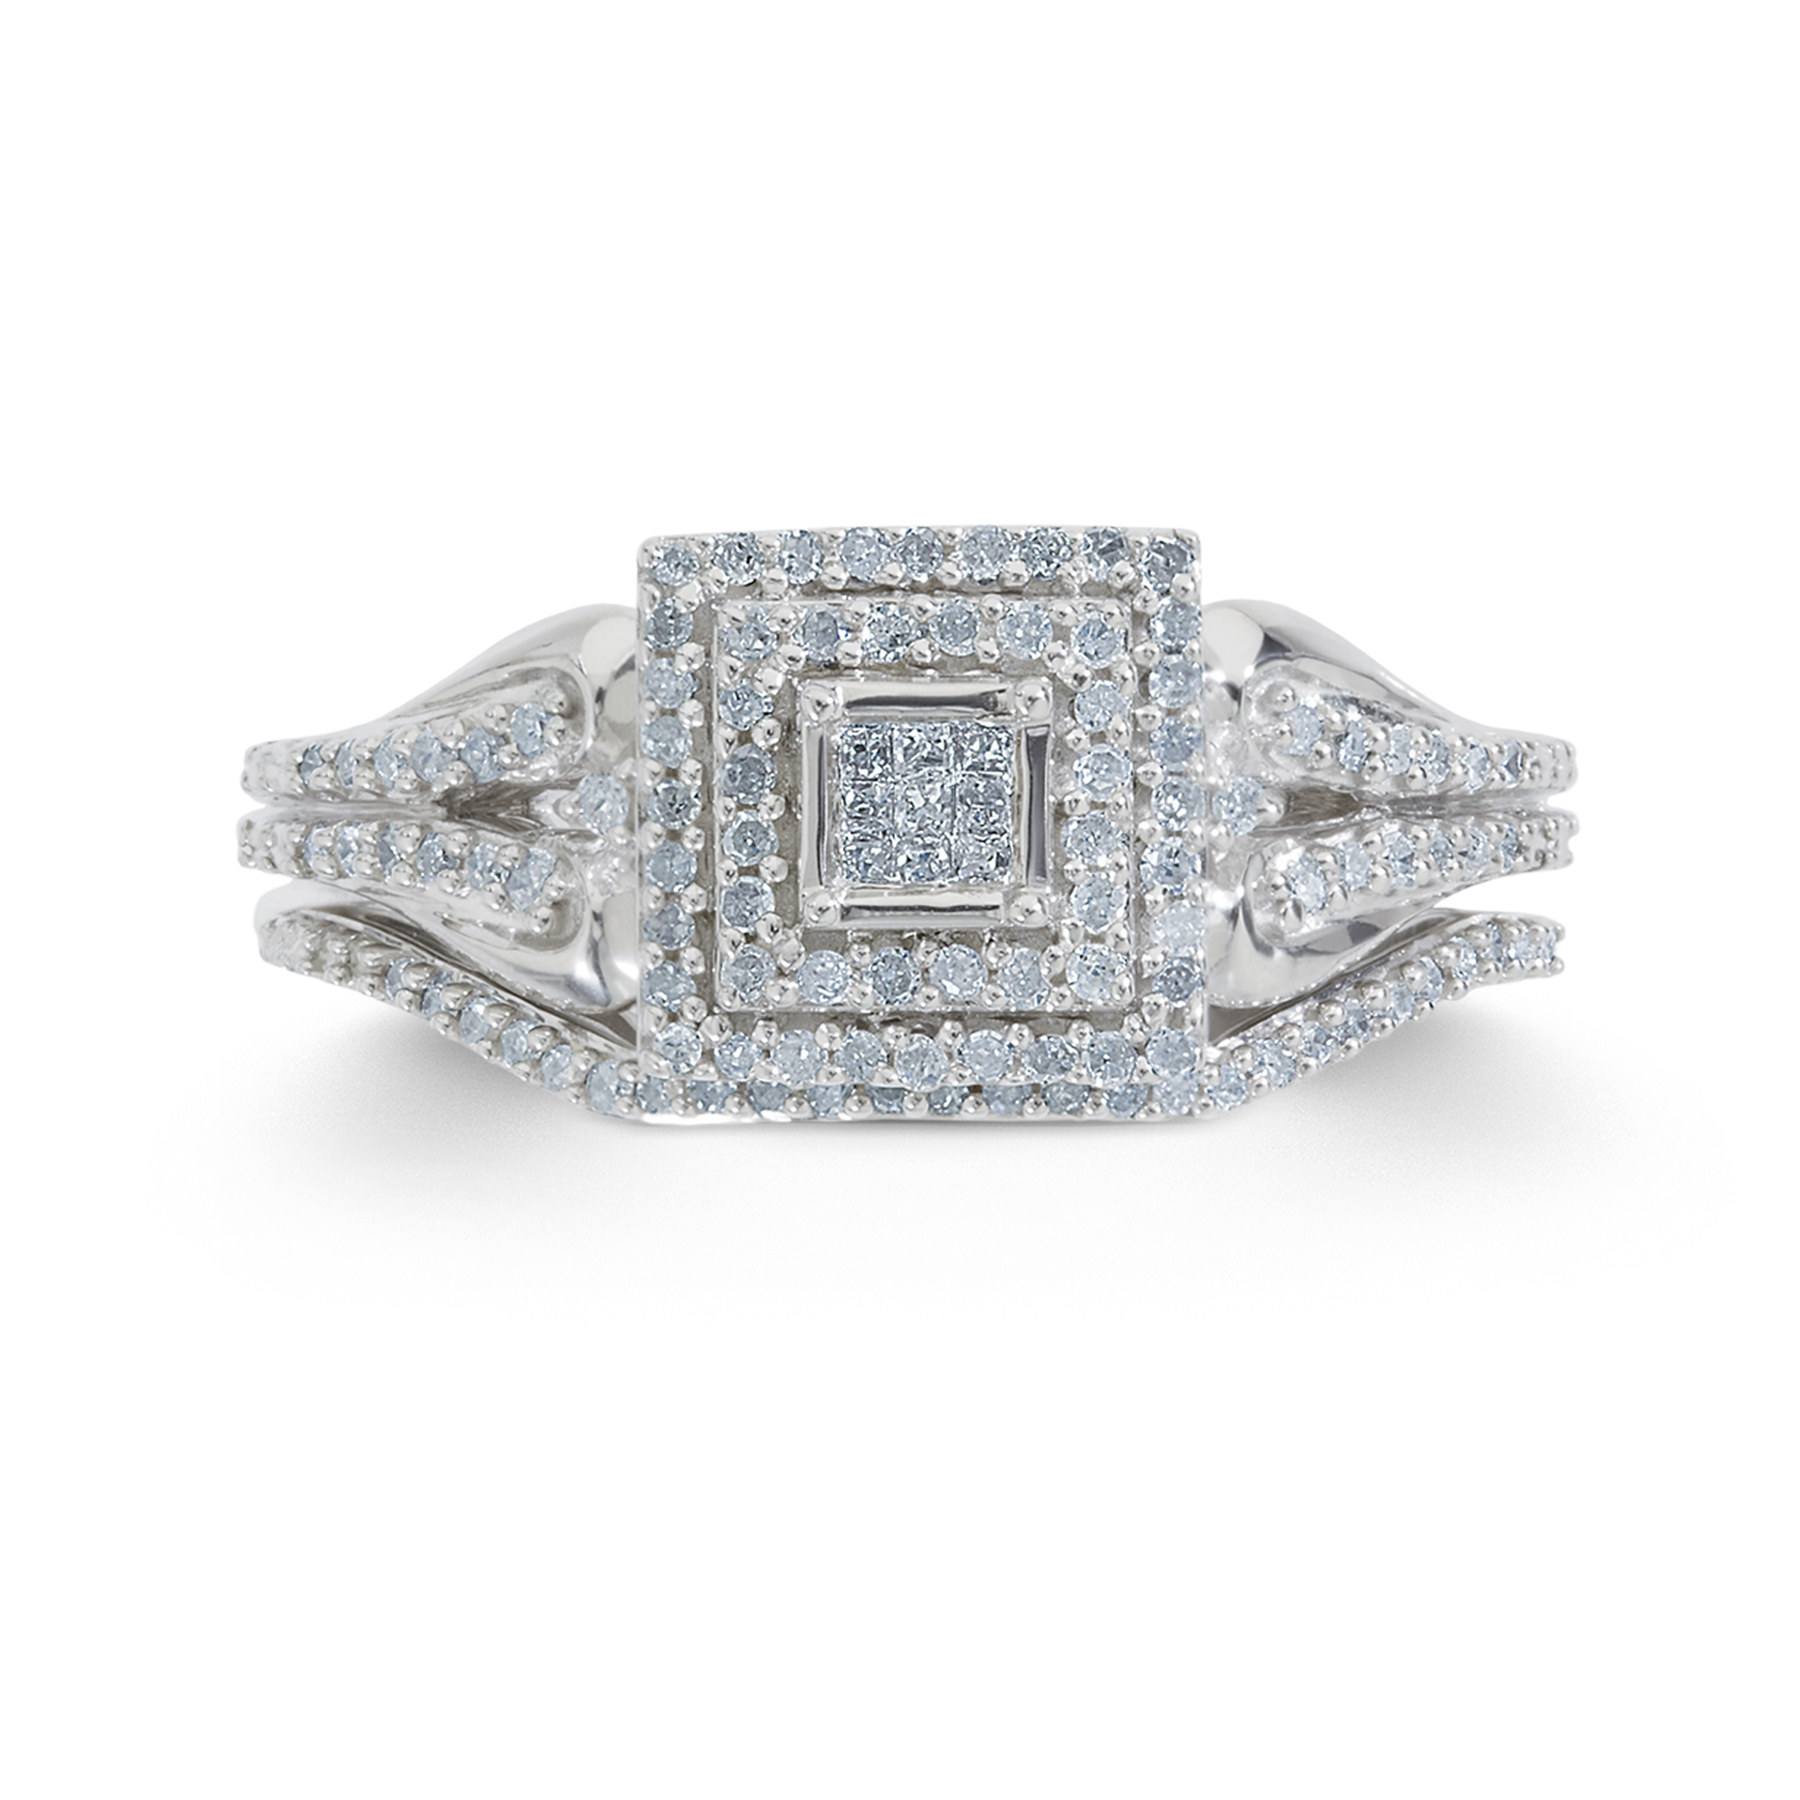 0.33 Cttw. Princess Cut Sterling Silver Diamond Bridal Set - Size 7 Only